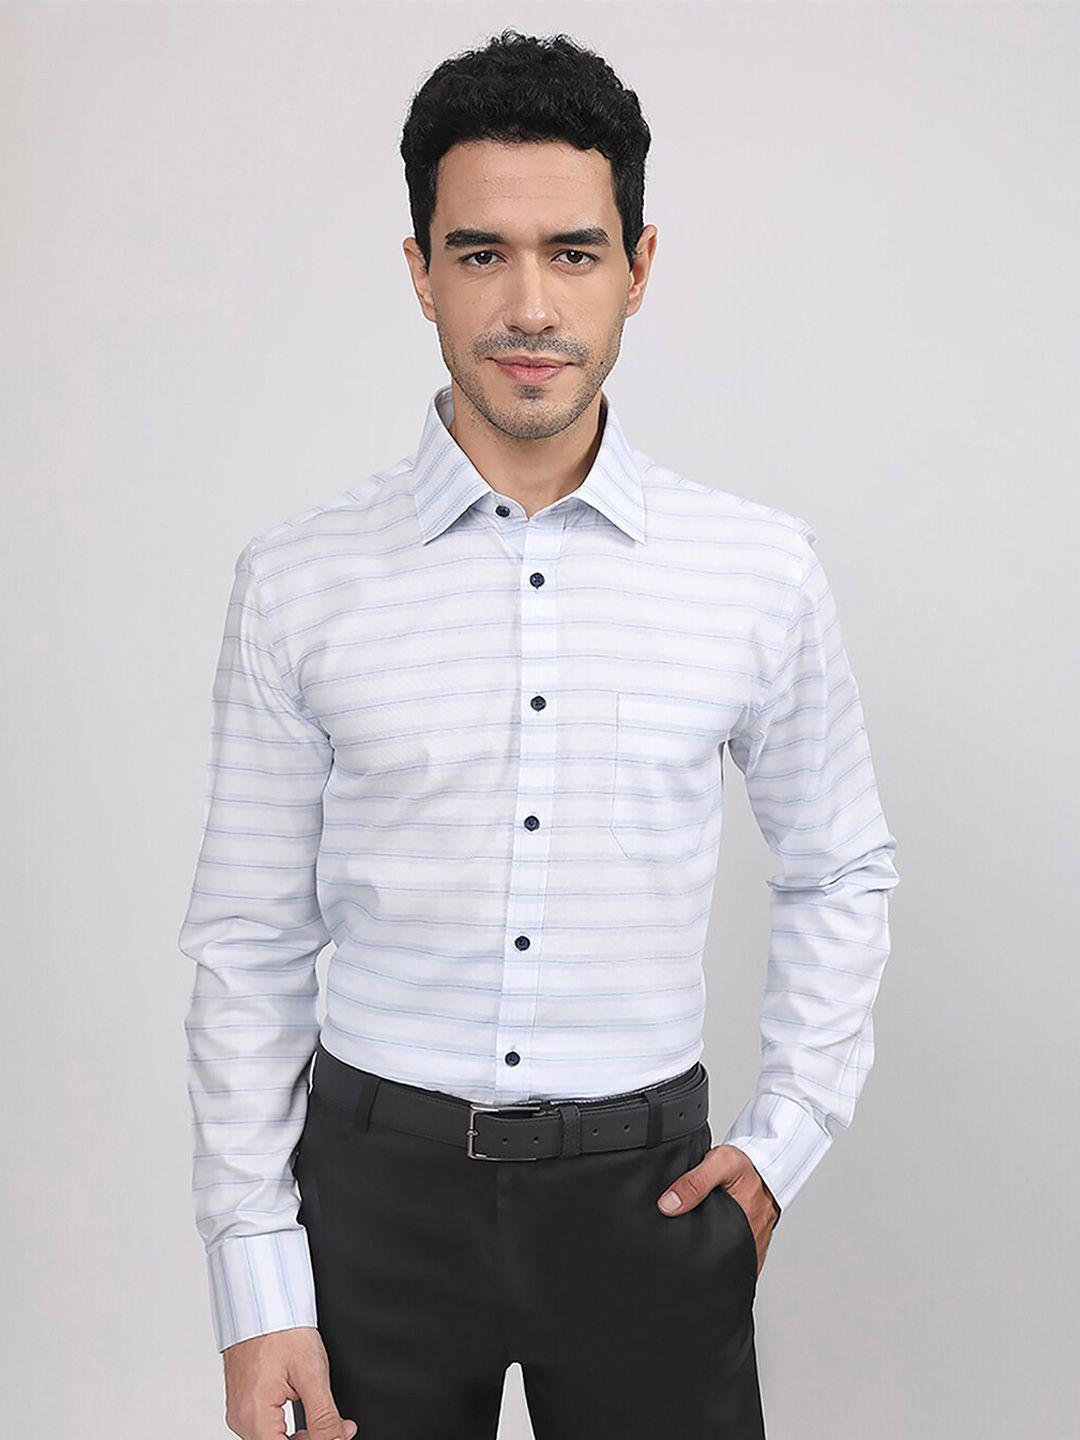 louis stitch comfort horizontal striped formal shirt